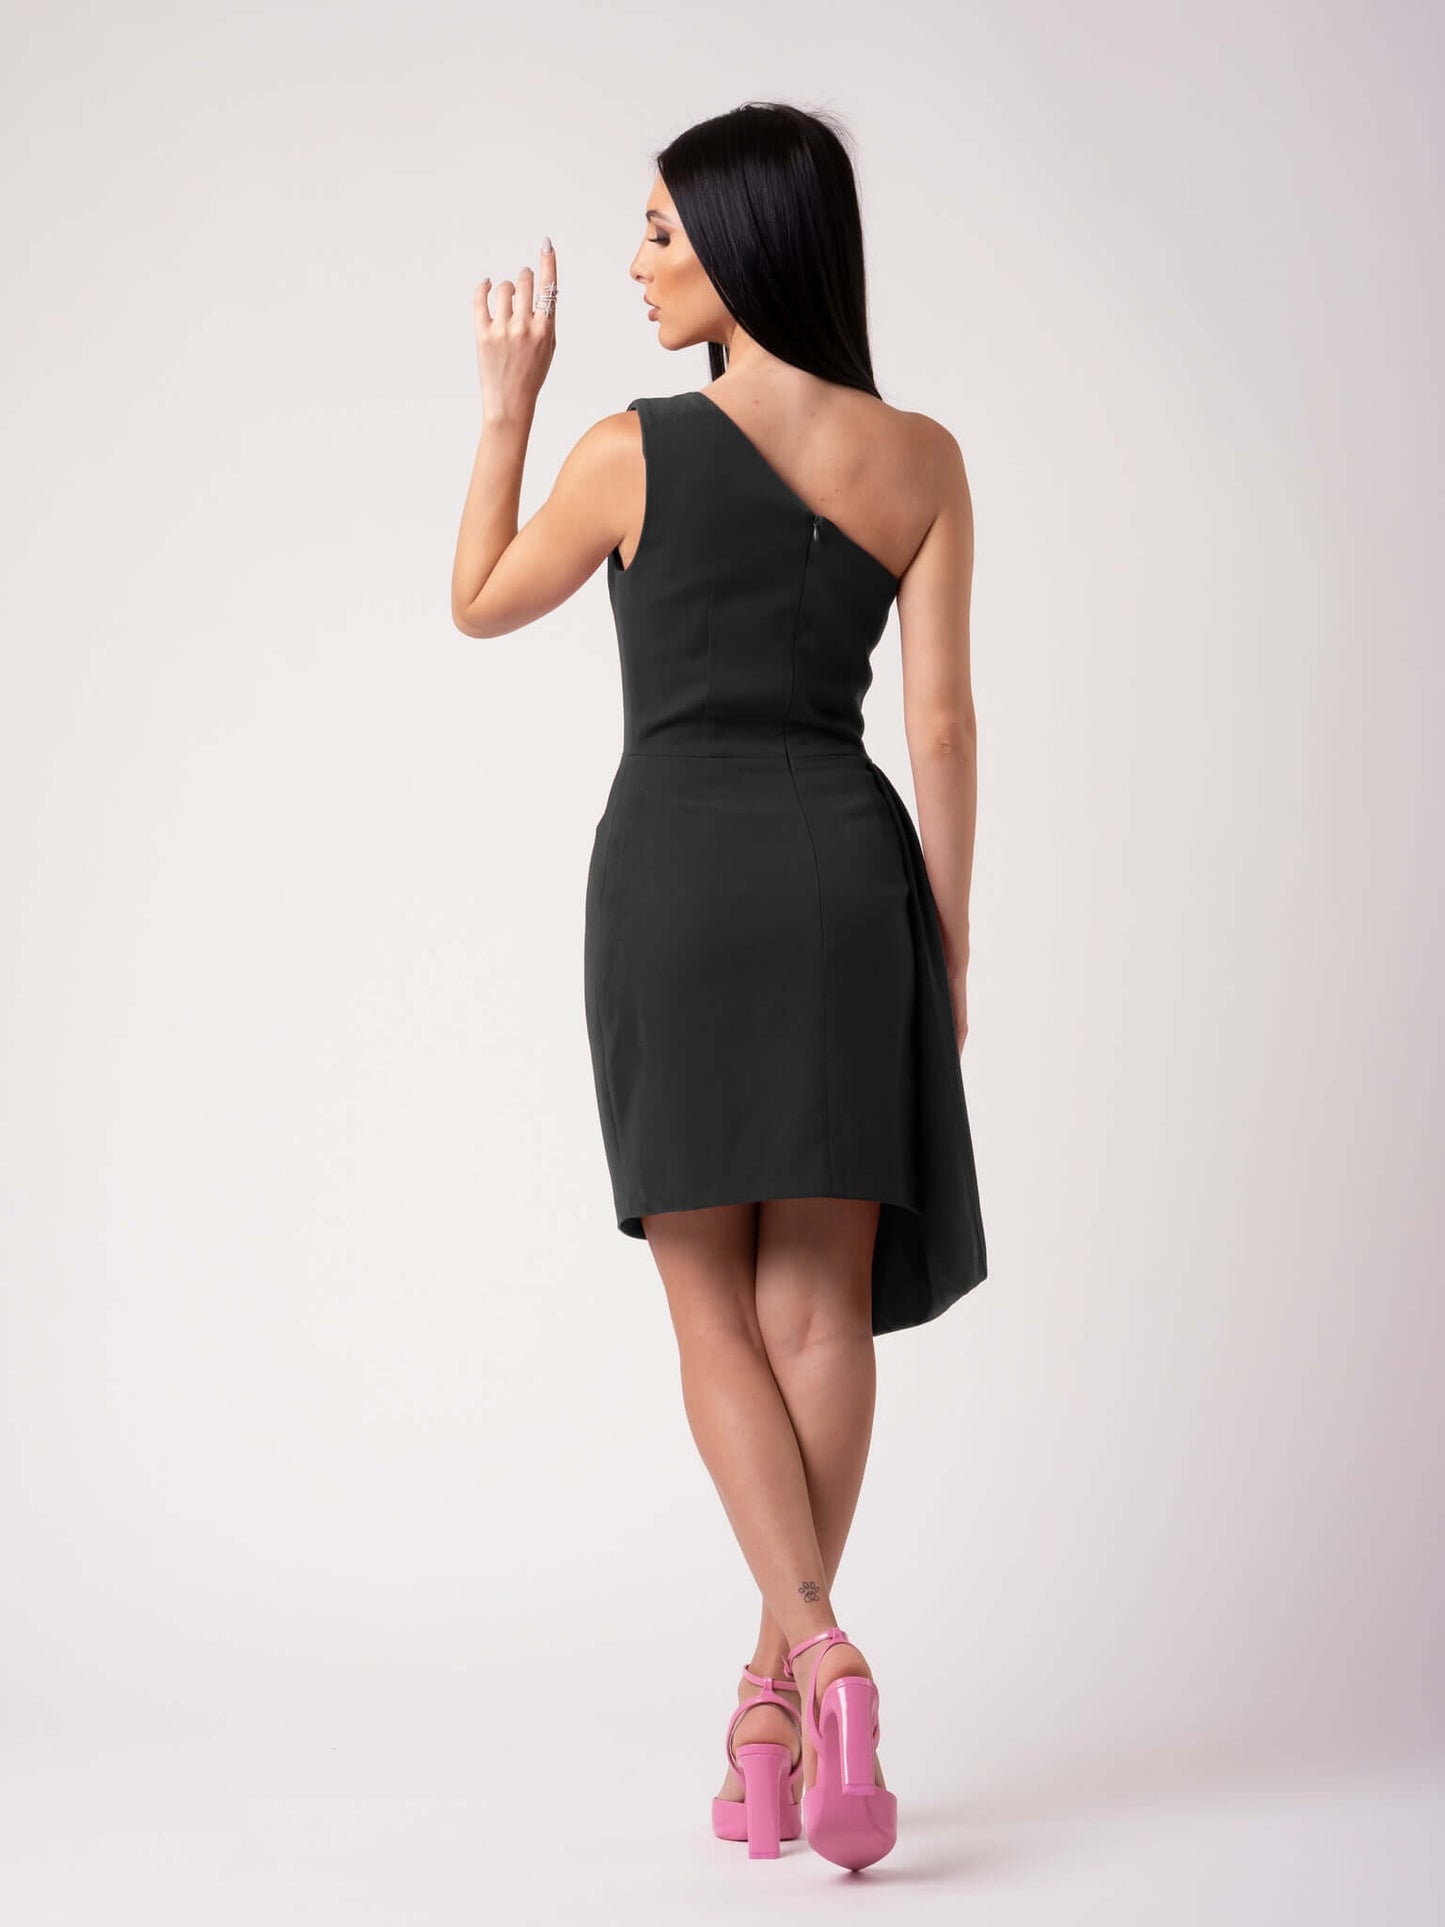 Iconic Glamour Short Dress - Black by Tia Dorraine Women's Luxury Fashion Designer Clothing Brand